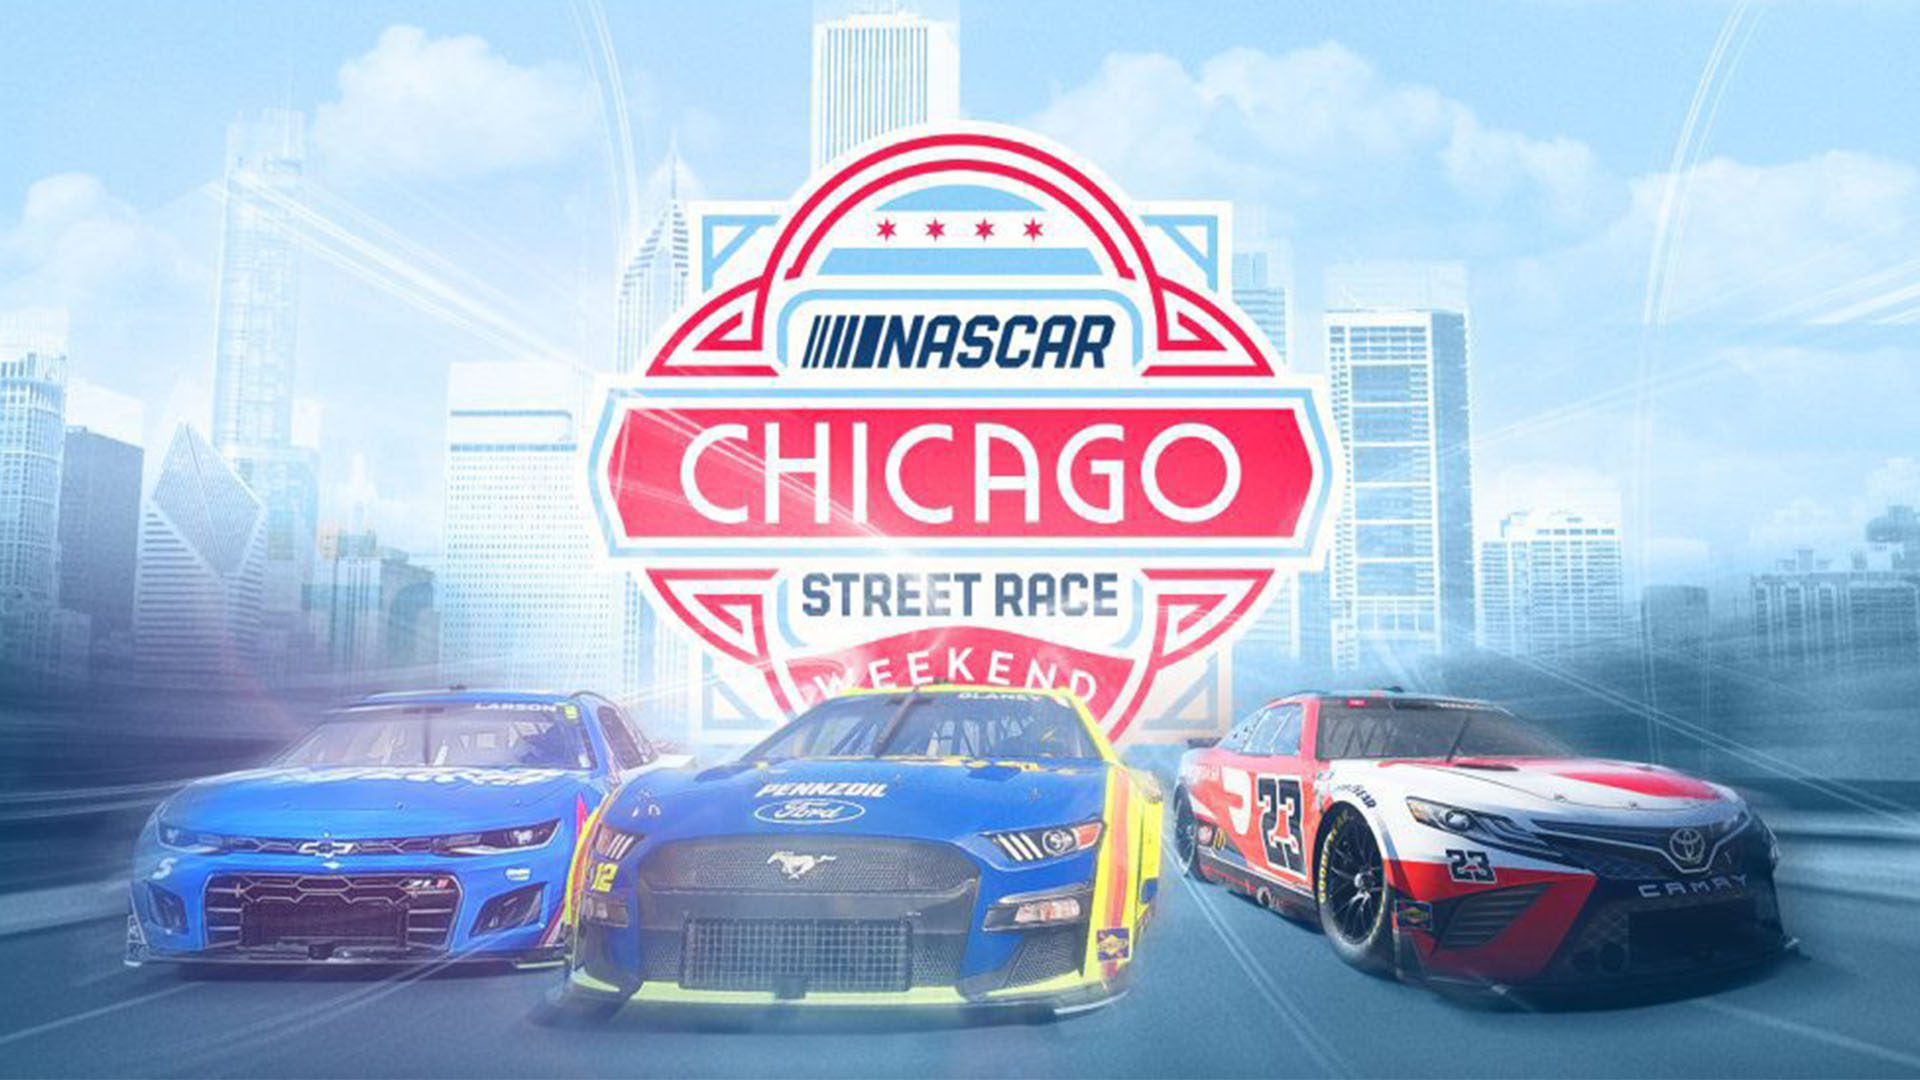 NASCAR Chicago Street Race Weekend Poster